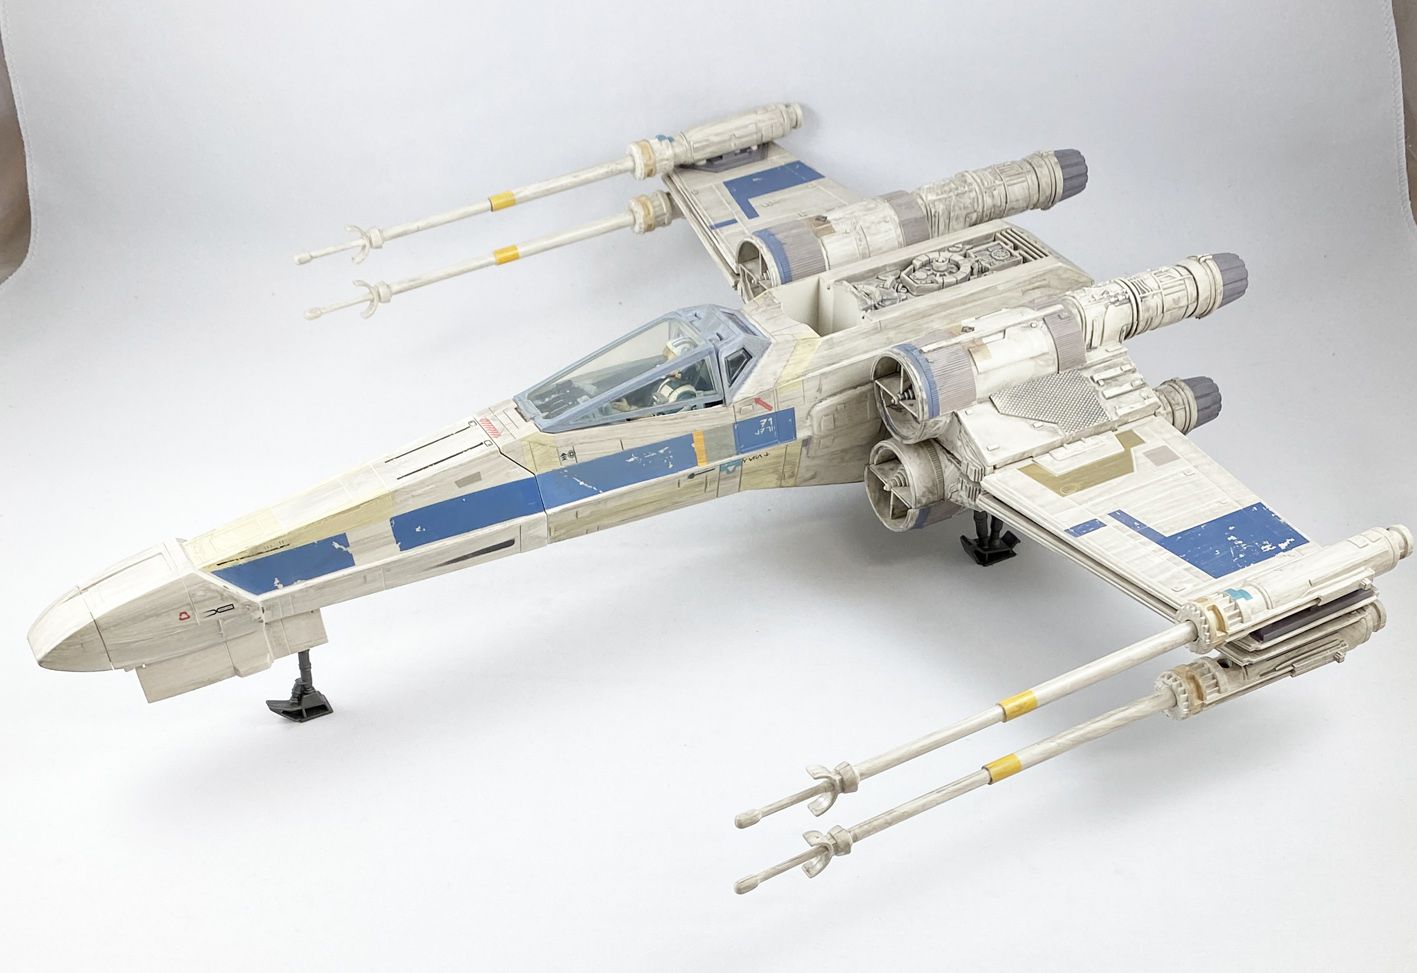 STAR WARS - Antoc Merrick's X-Wing Fighter - Vintage Colection :  : Figurines Hasbro Star Wars